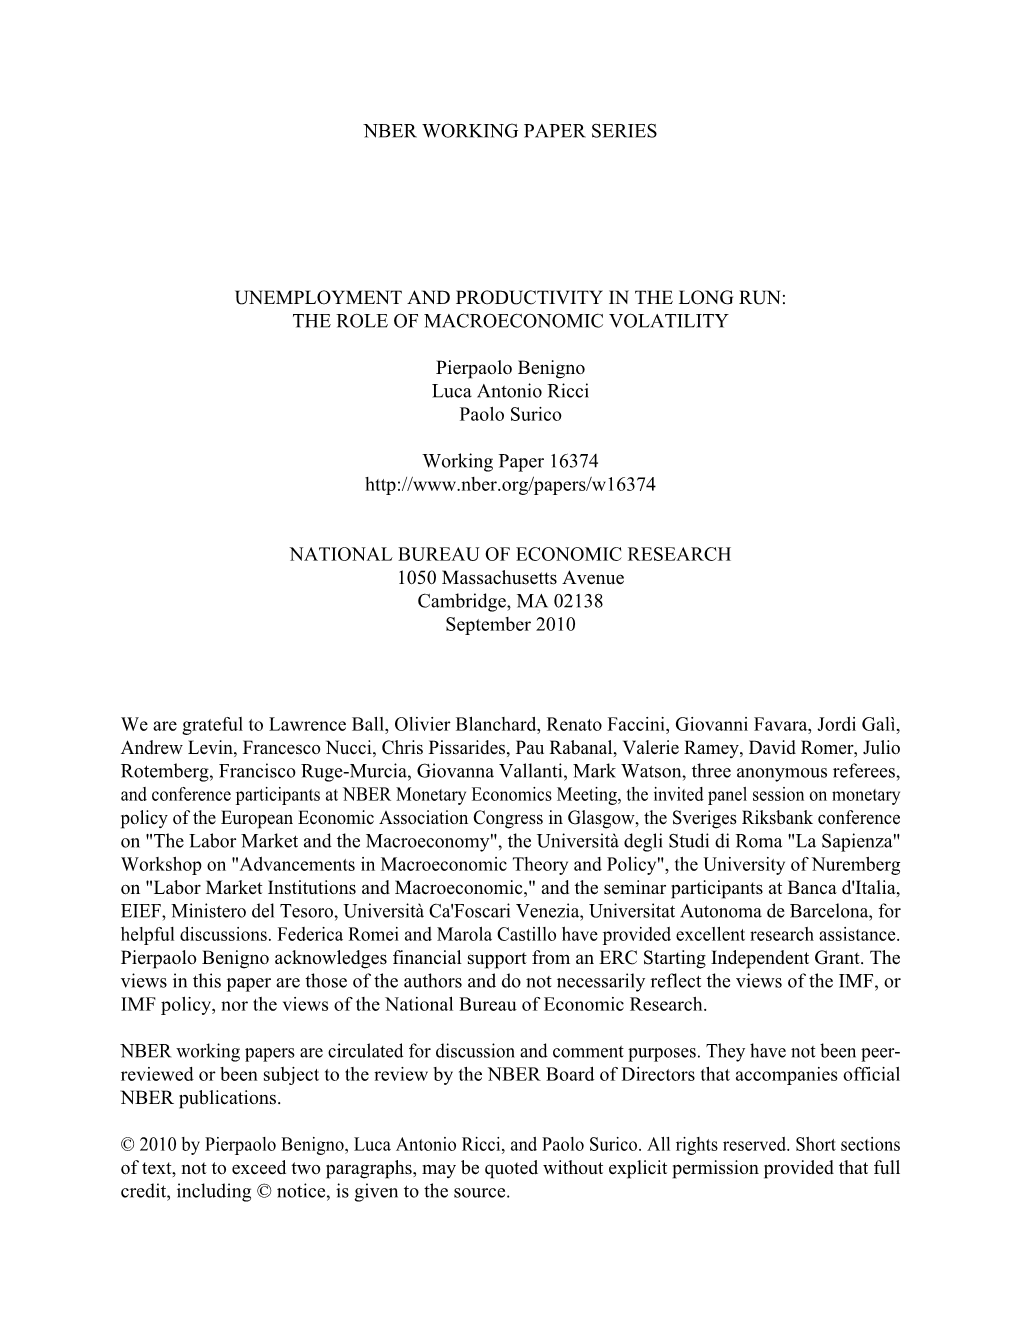 The Role of Macroeconomic Volatility Pierpaolo Benigno, Luca Antonio Ricci, and Paolo Surico NBER Working Paper No